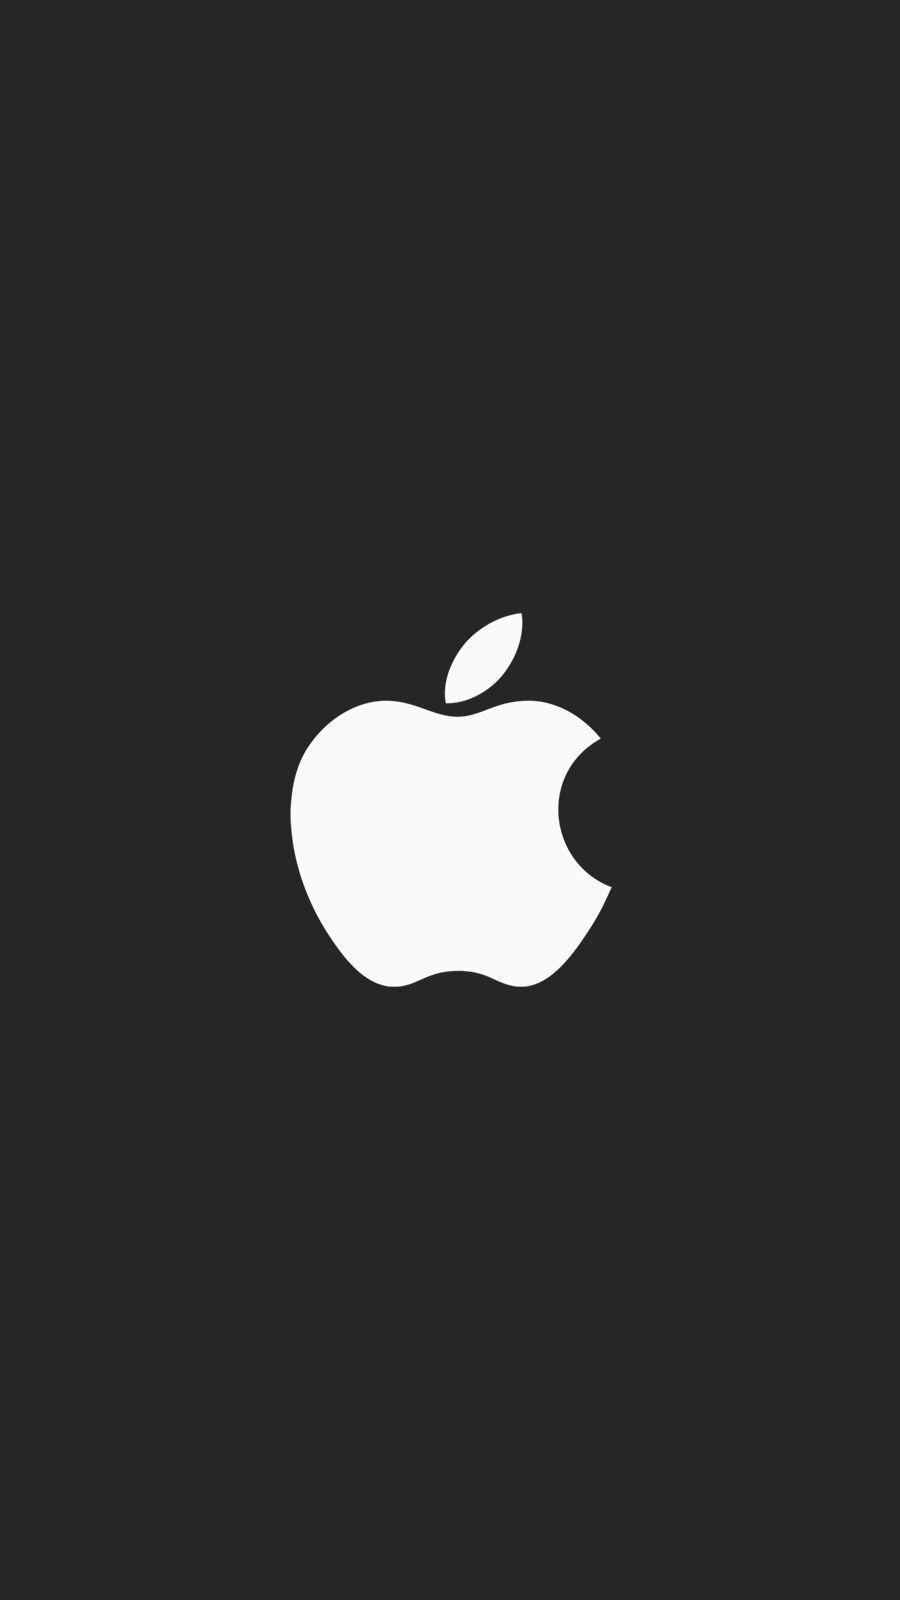 iPhone 8 Logo - Apple minimal logo black iPhone Wallpaper. iphone 5s wallpaper